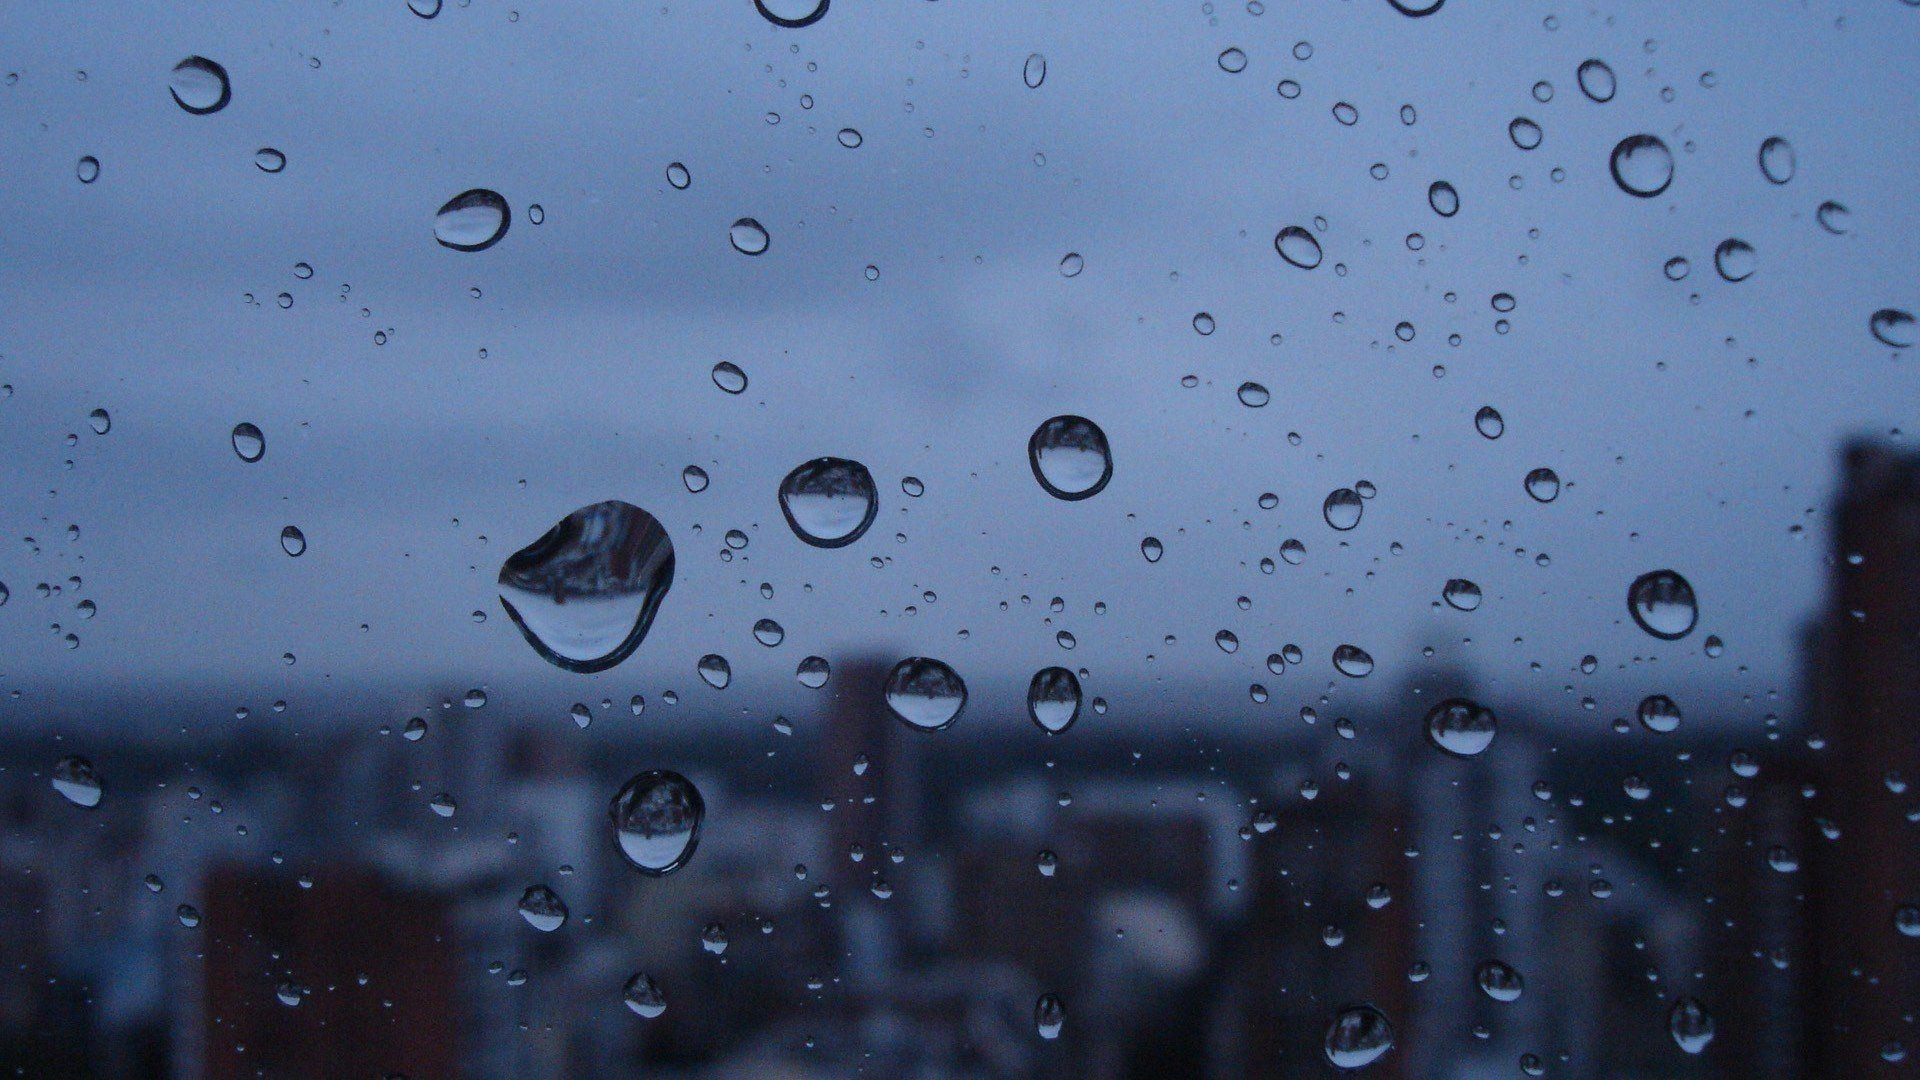 Raindrops On The Window 765050